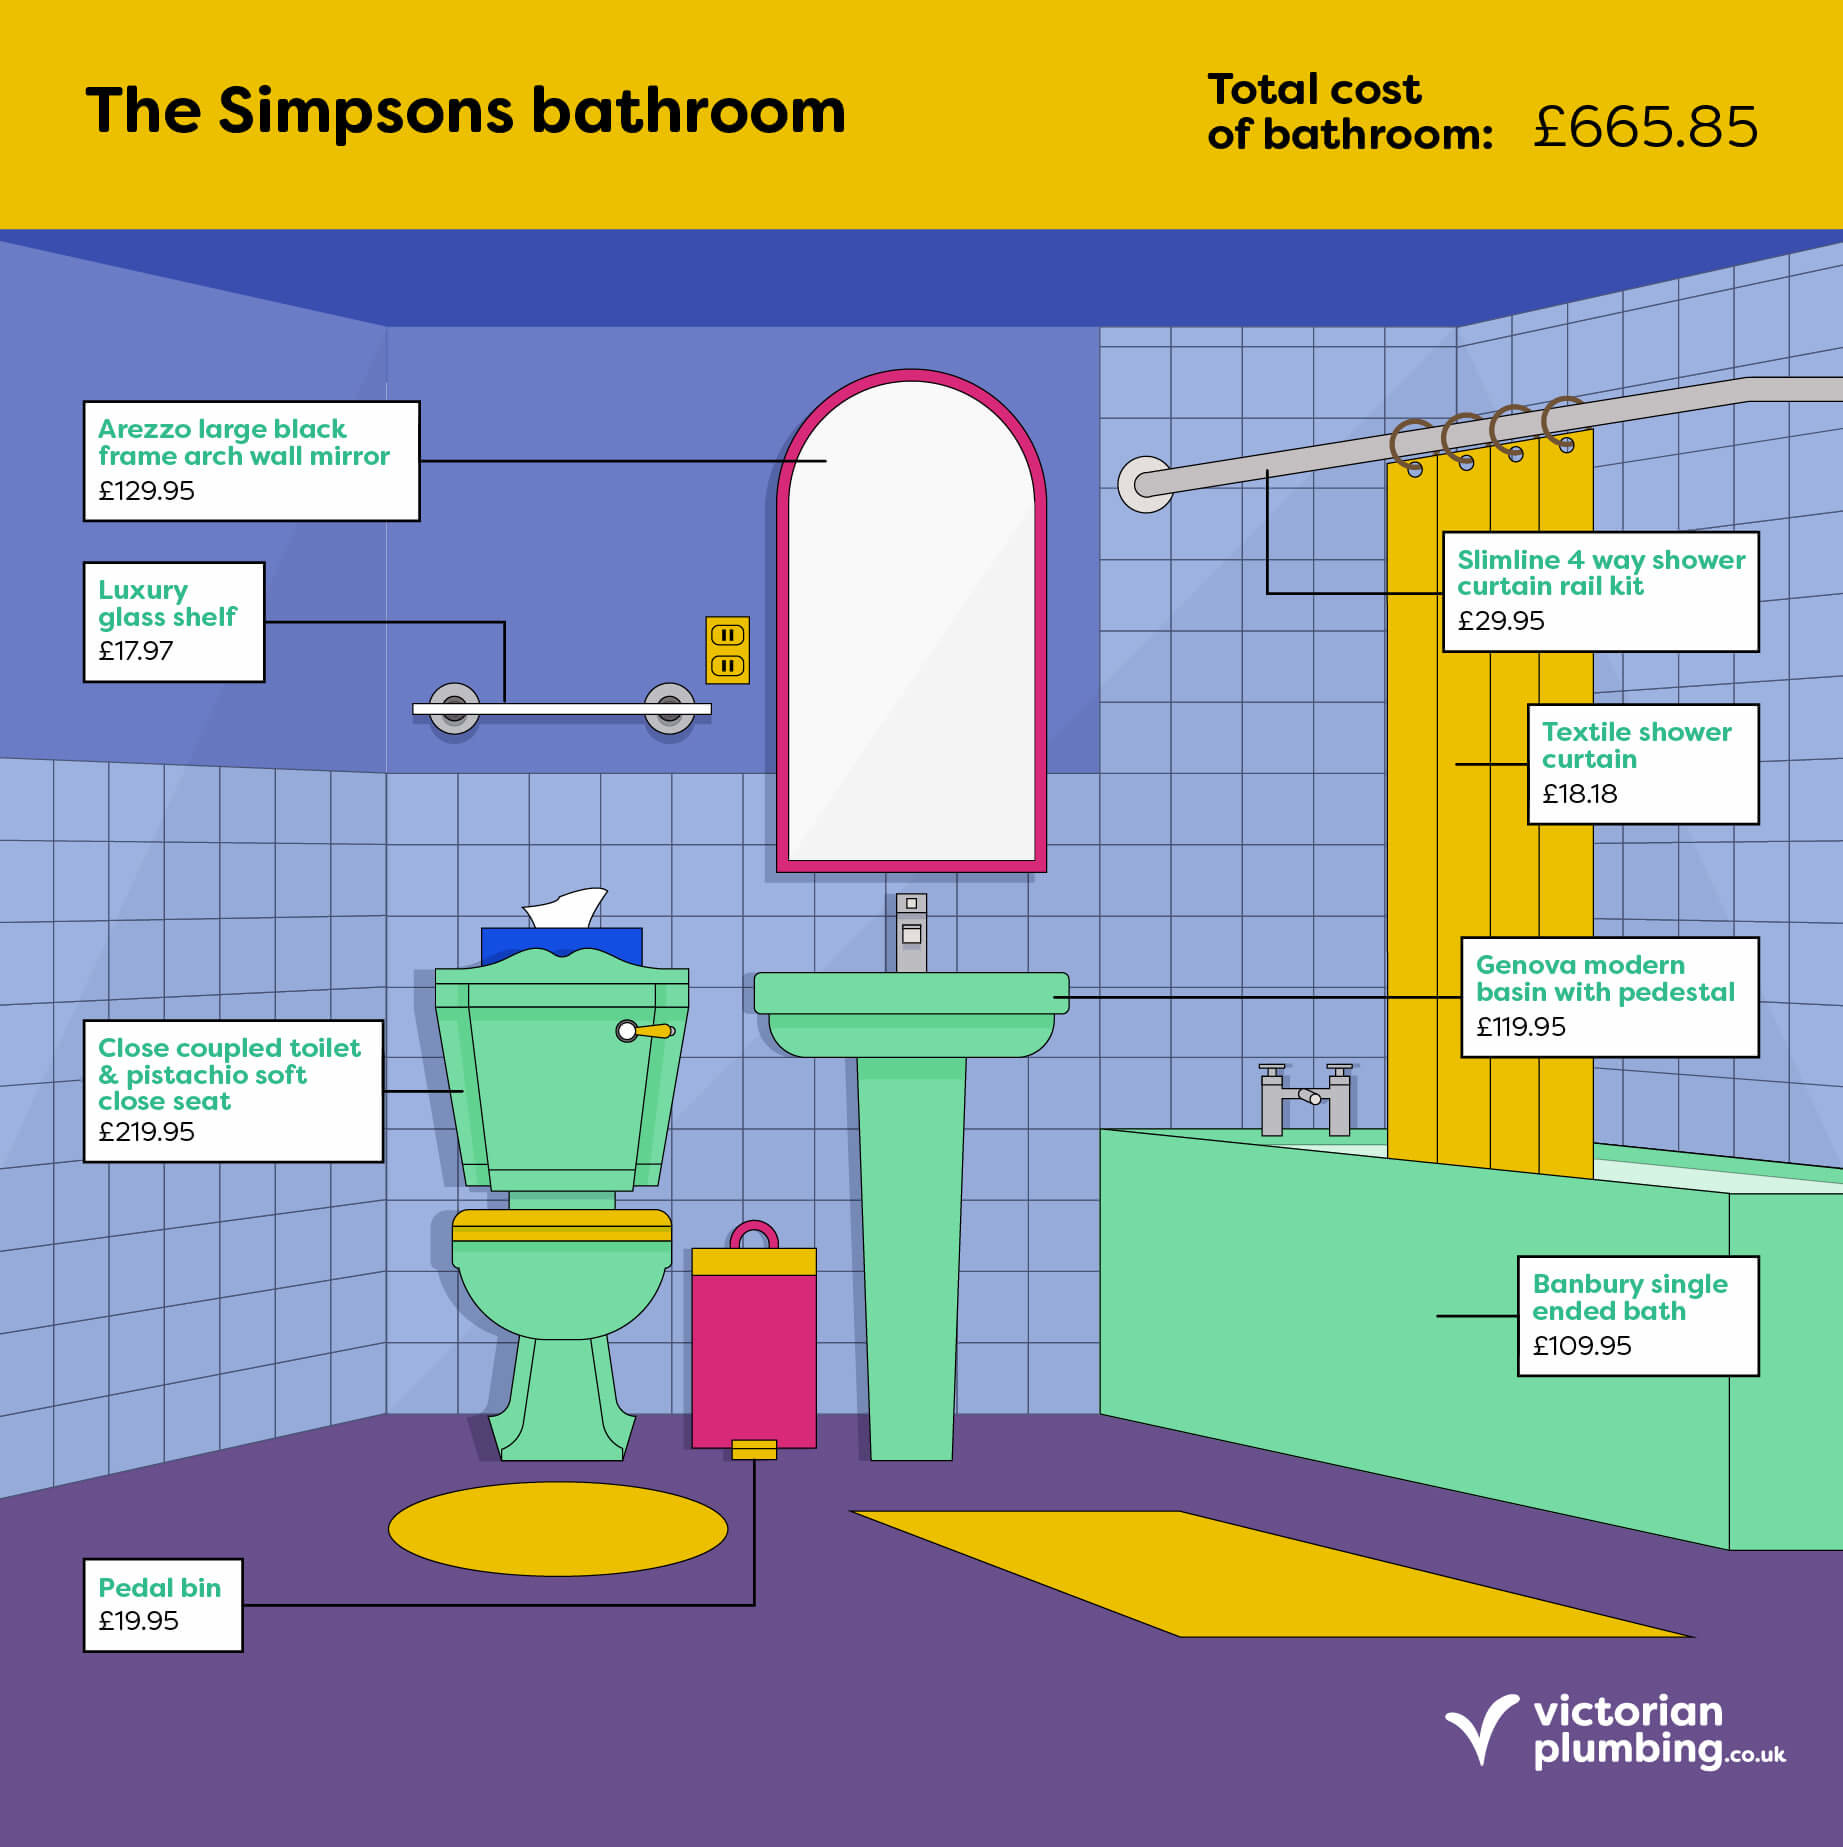 Fictional Bathroom: The Simpsons